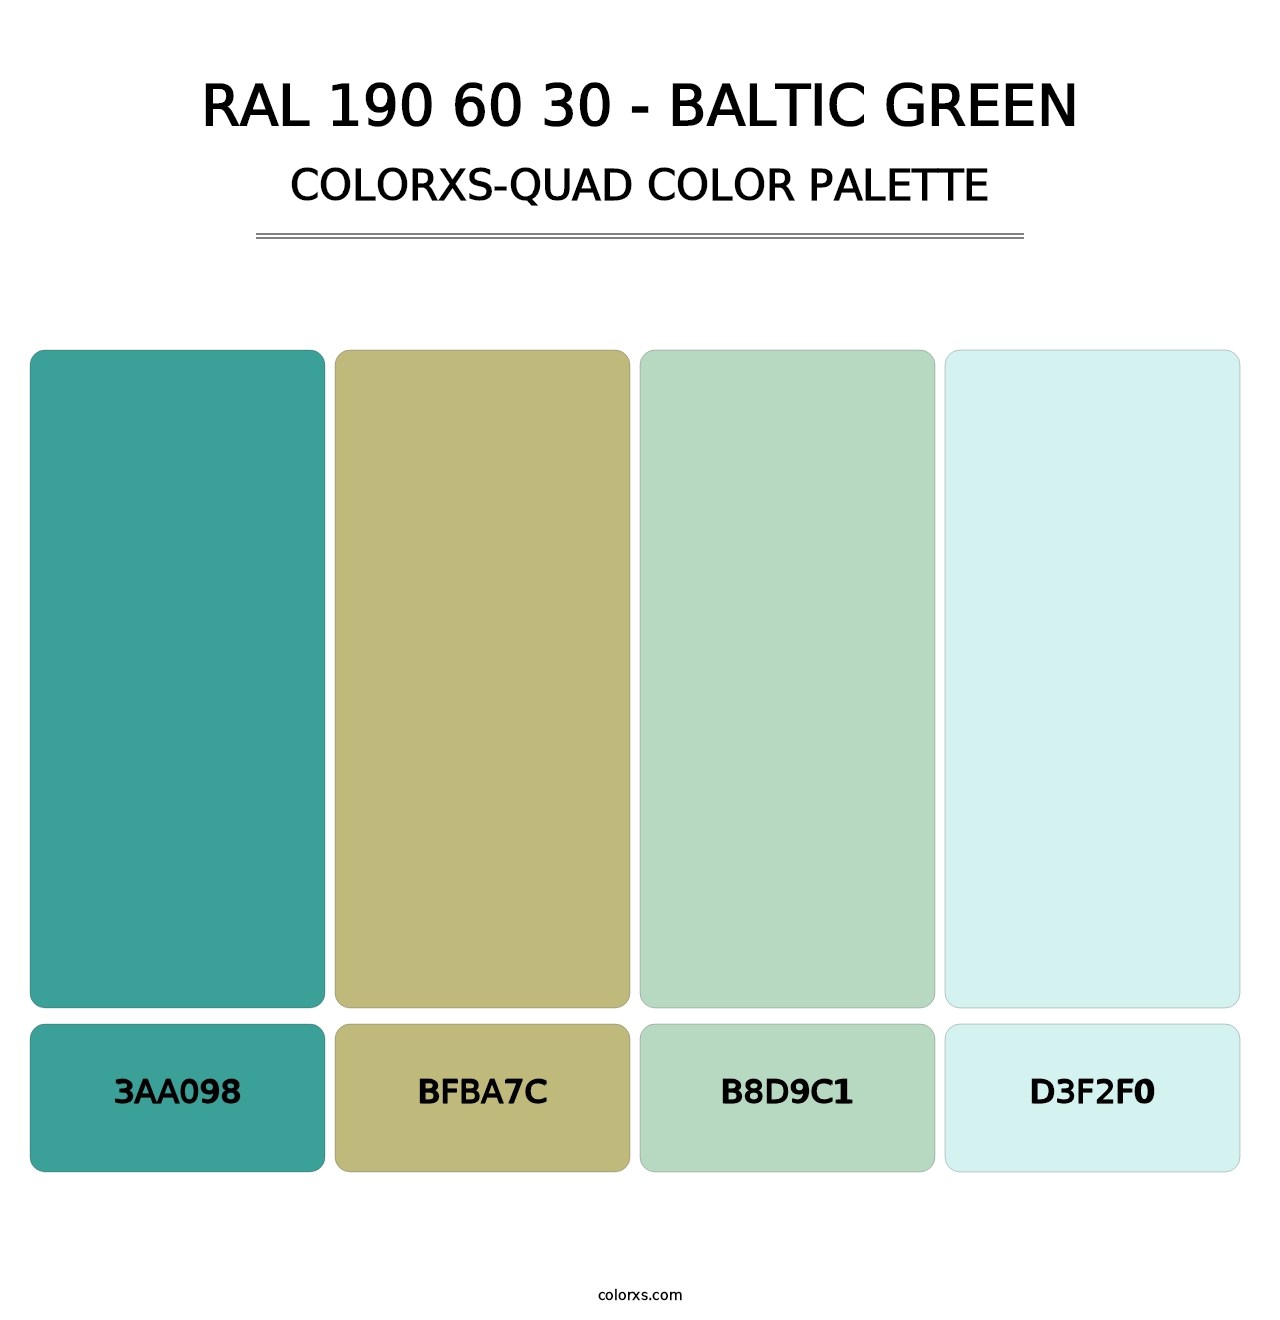 RAL 190 60 30 - Baltic Green - Colorxs Quad Palette